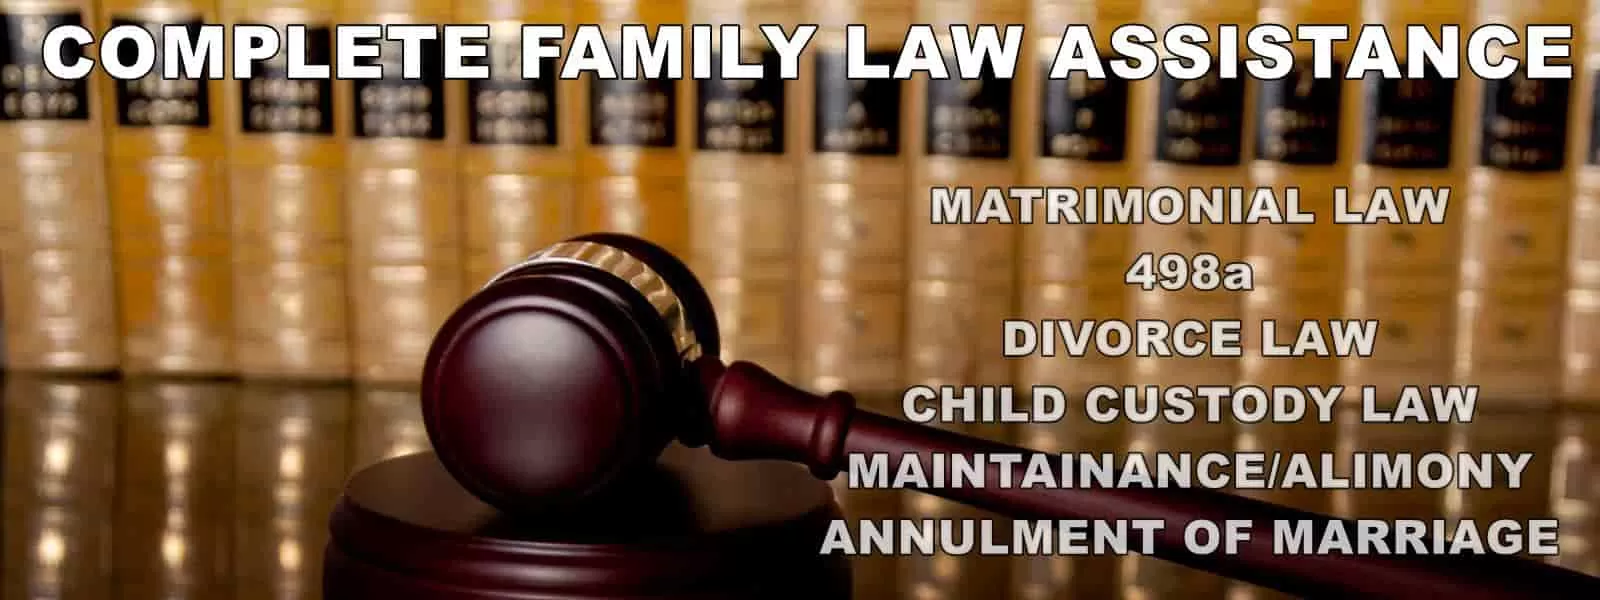 divorce 498a lawyer in delhi